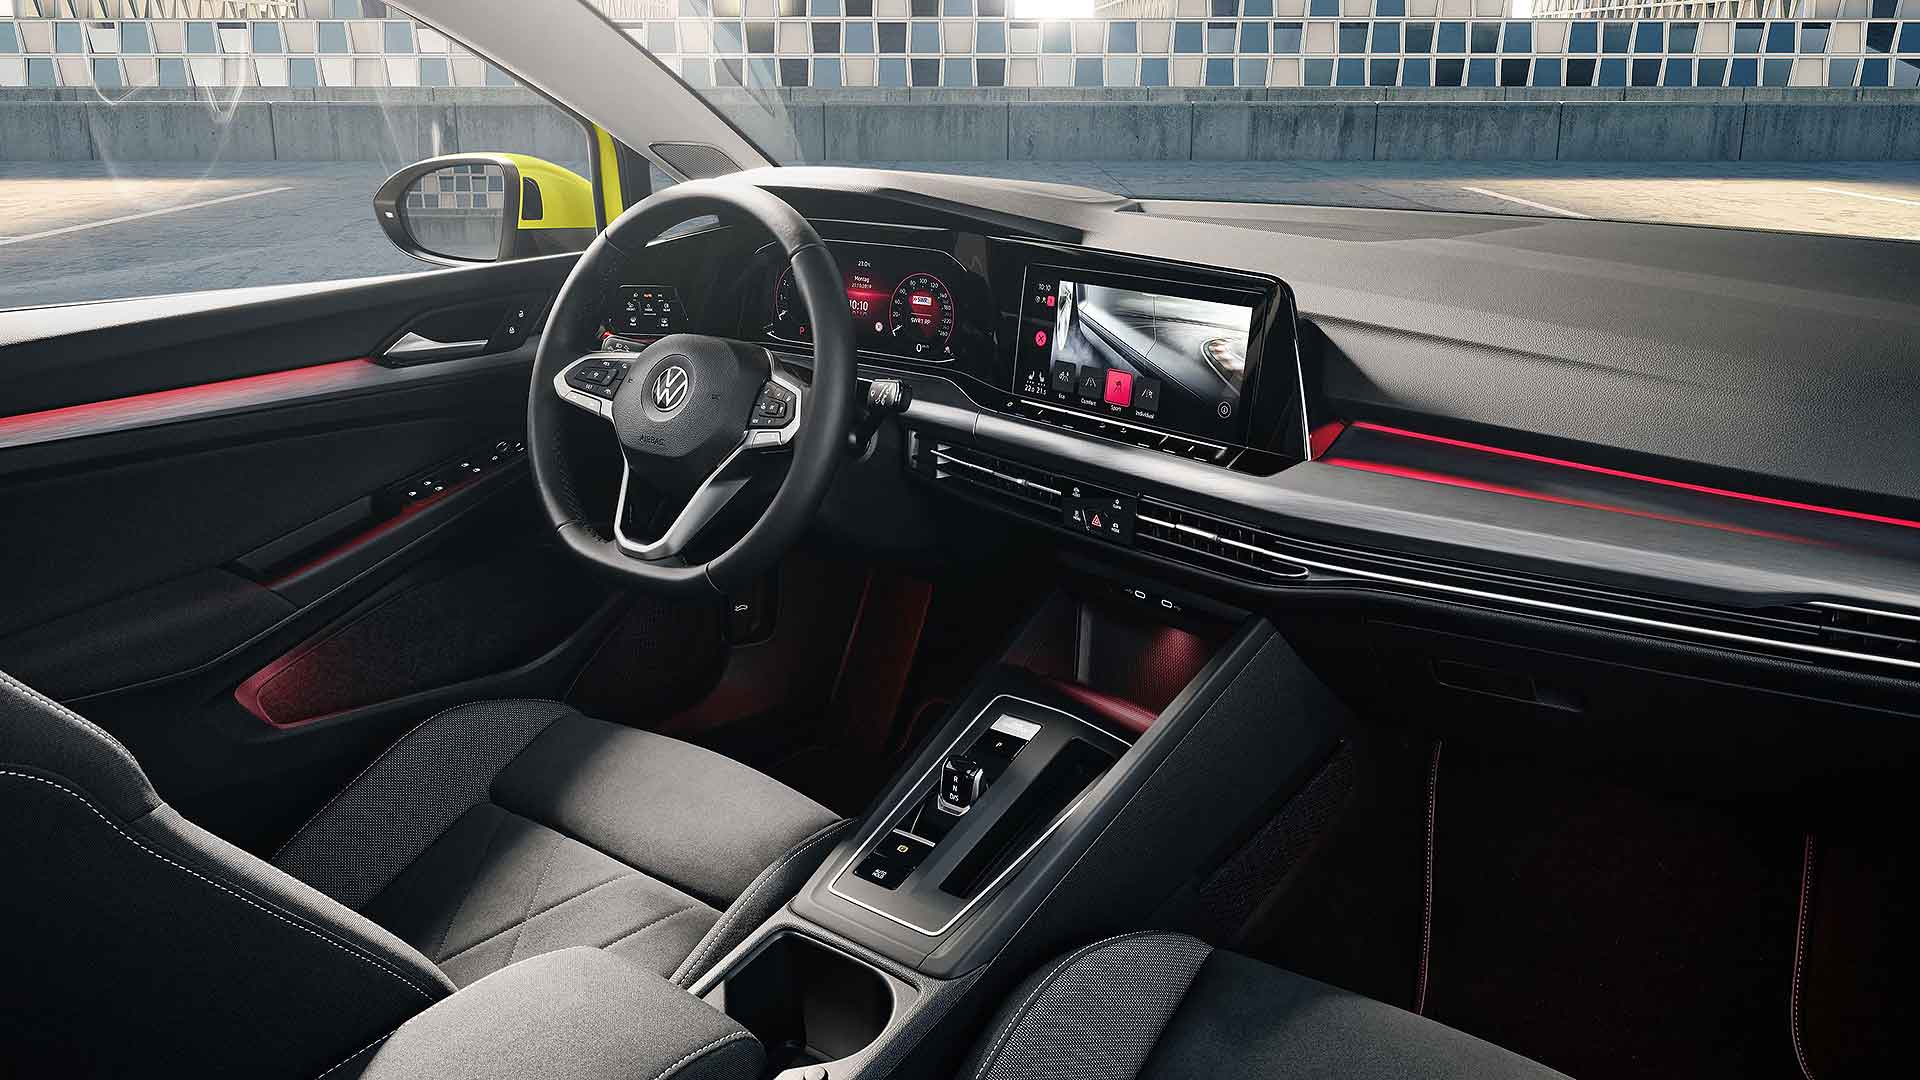 Volkswagen Golf 8 interior